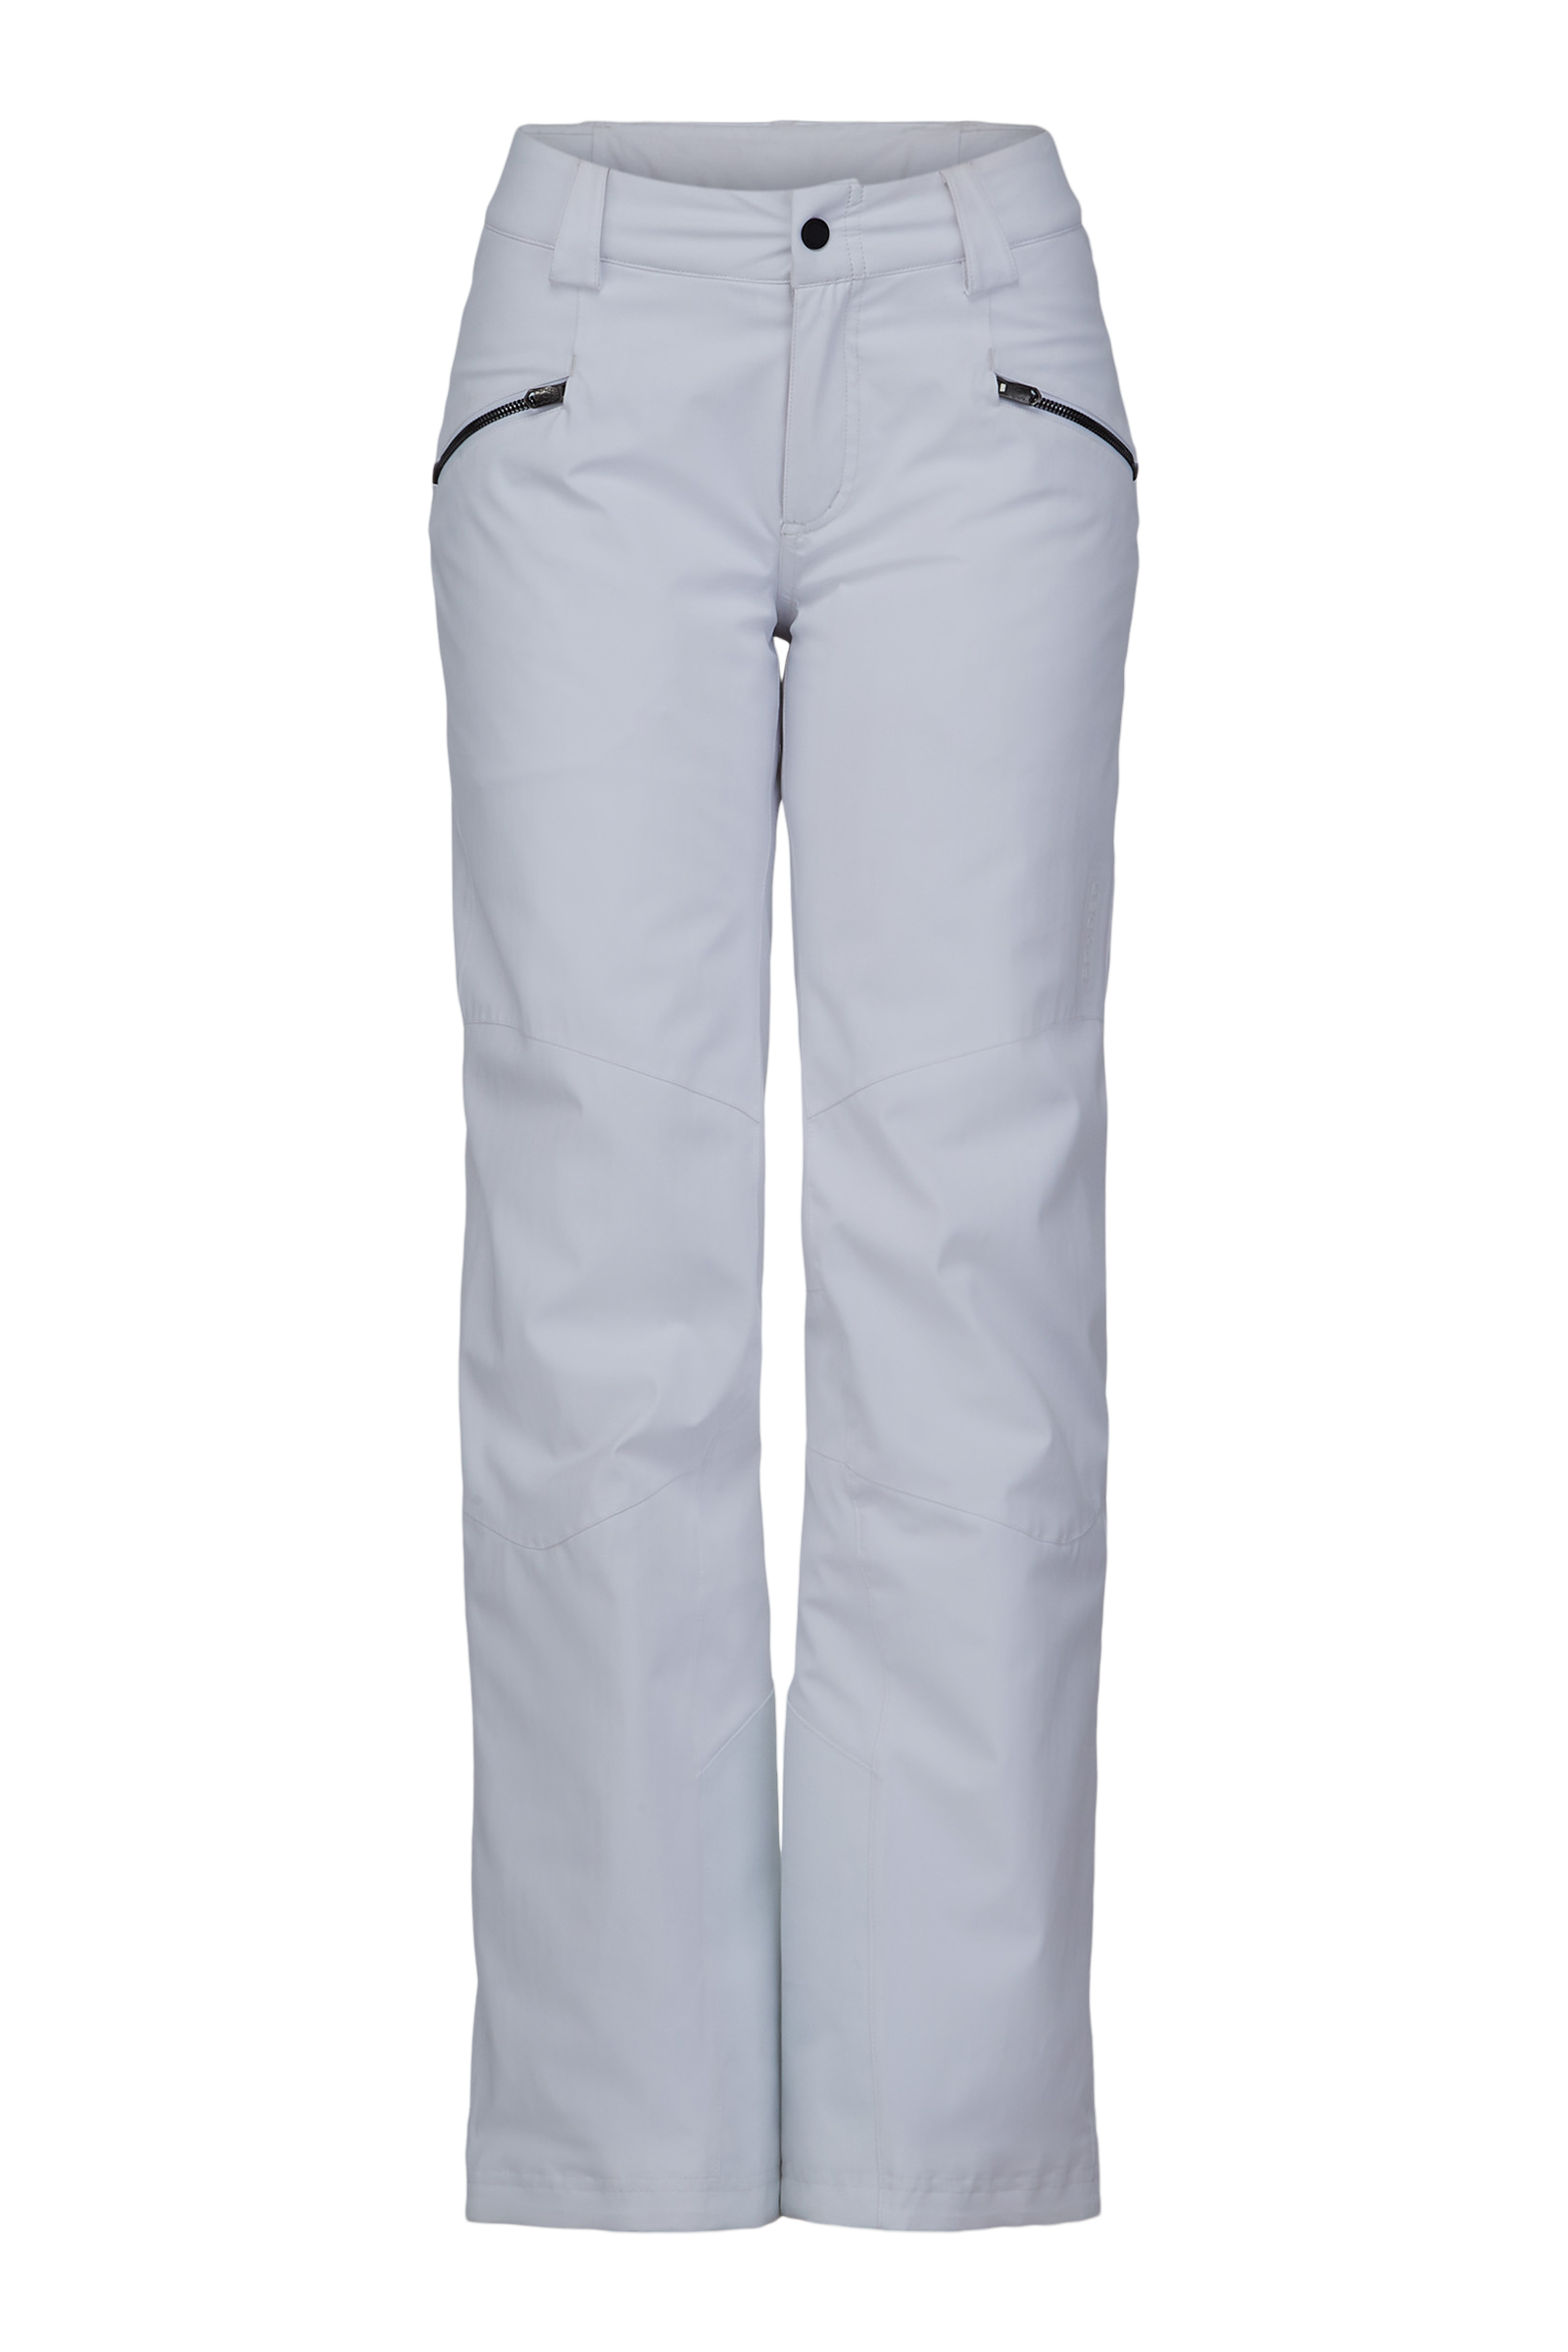 Spyder womens Size 6 Ski Pants Primaloft Snow Pants Insulated Black